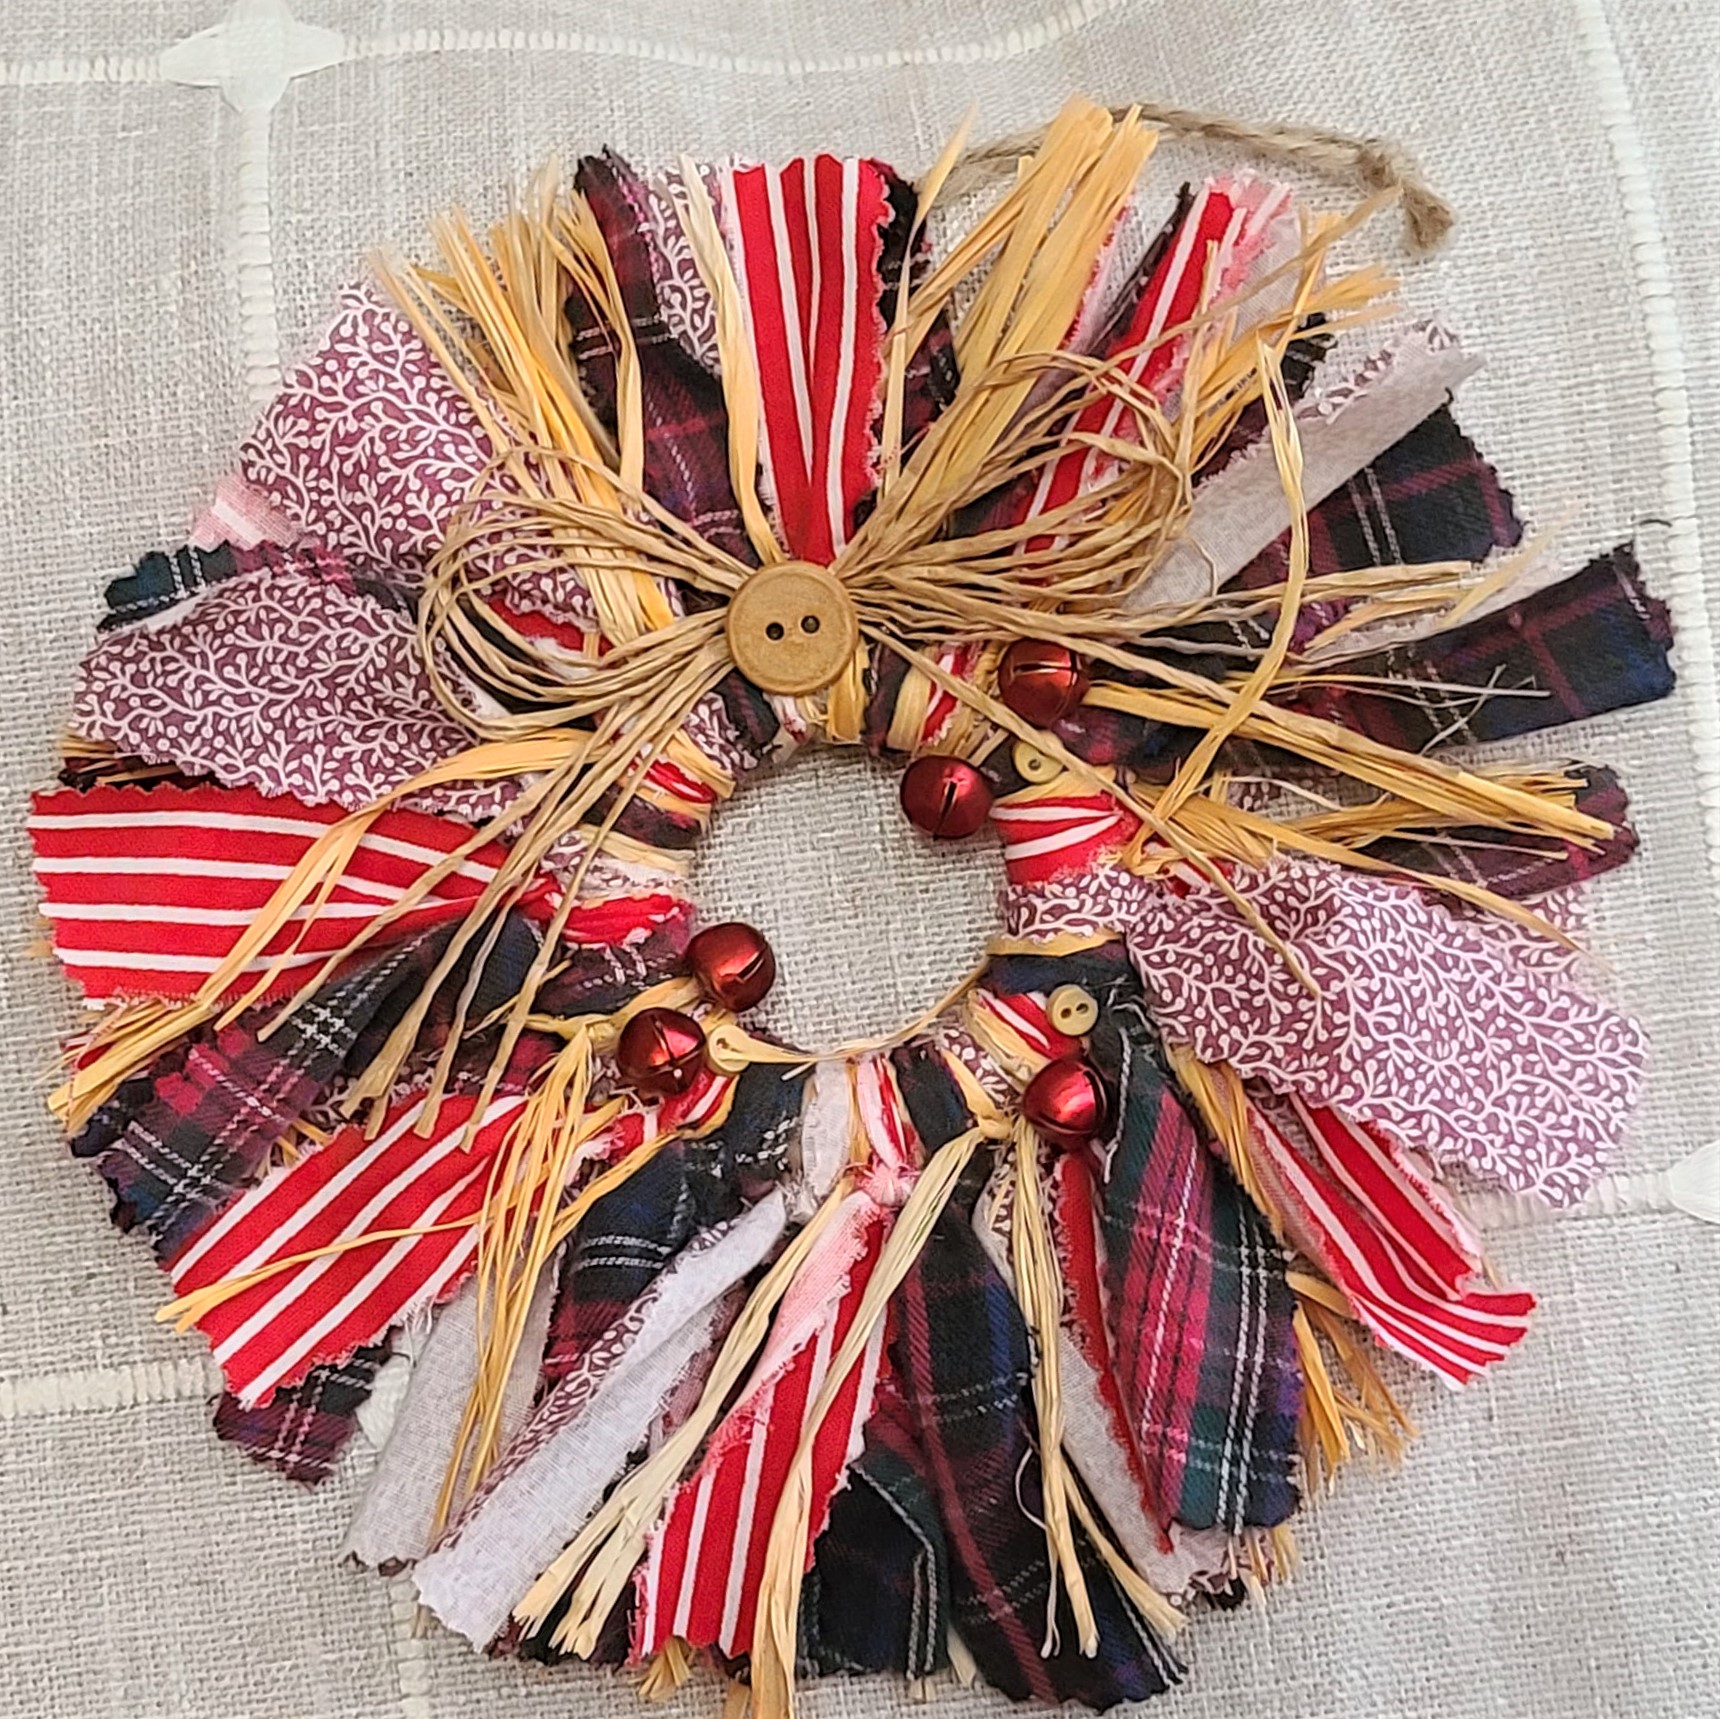 Mini wreath ornament 7" rag wreath country rustic style